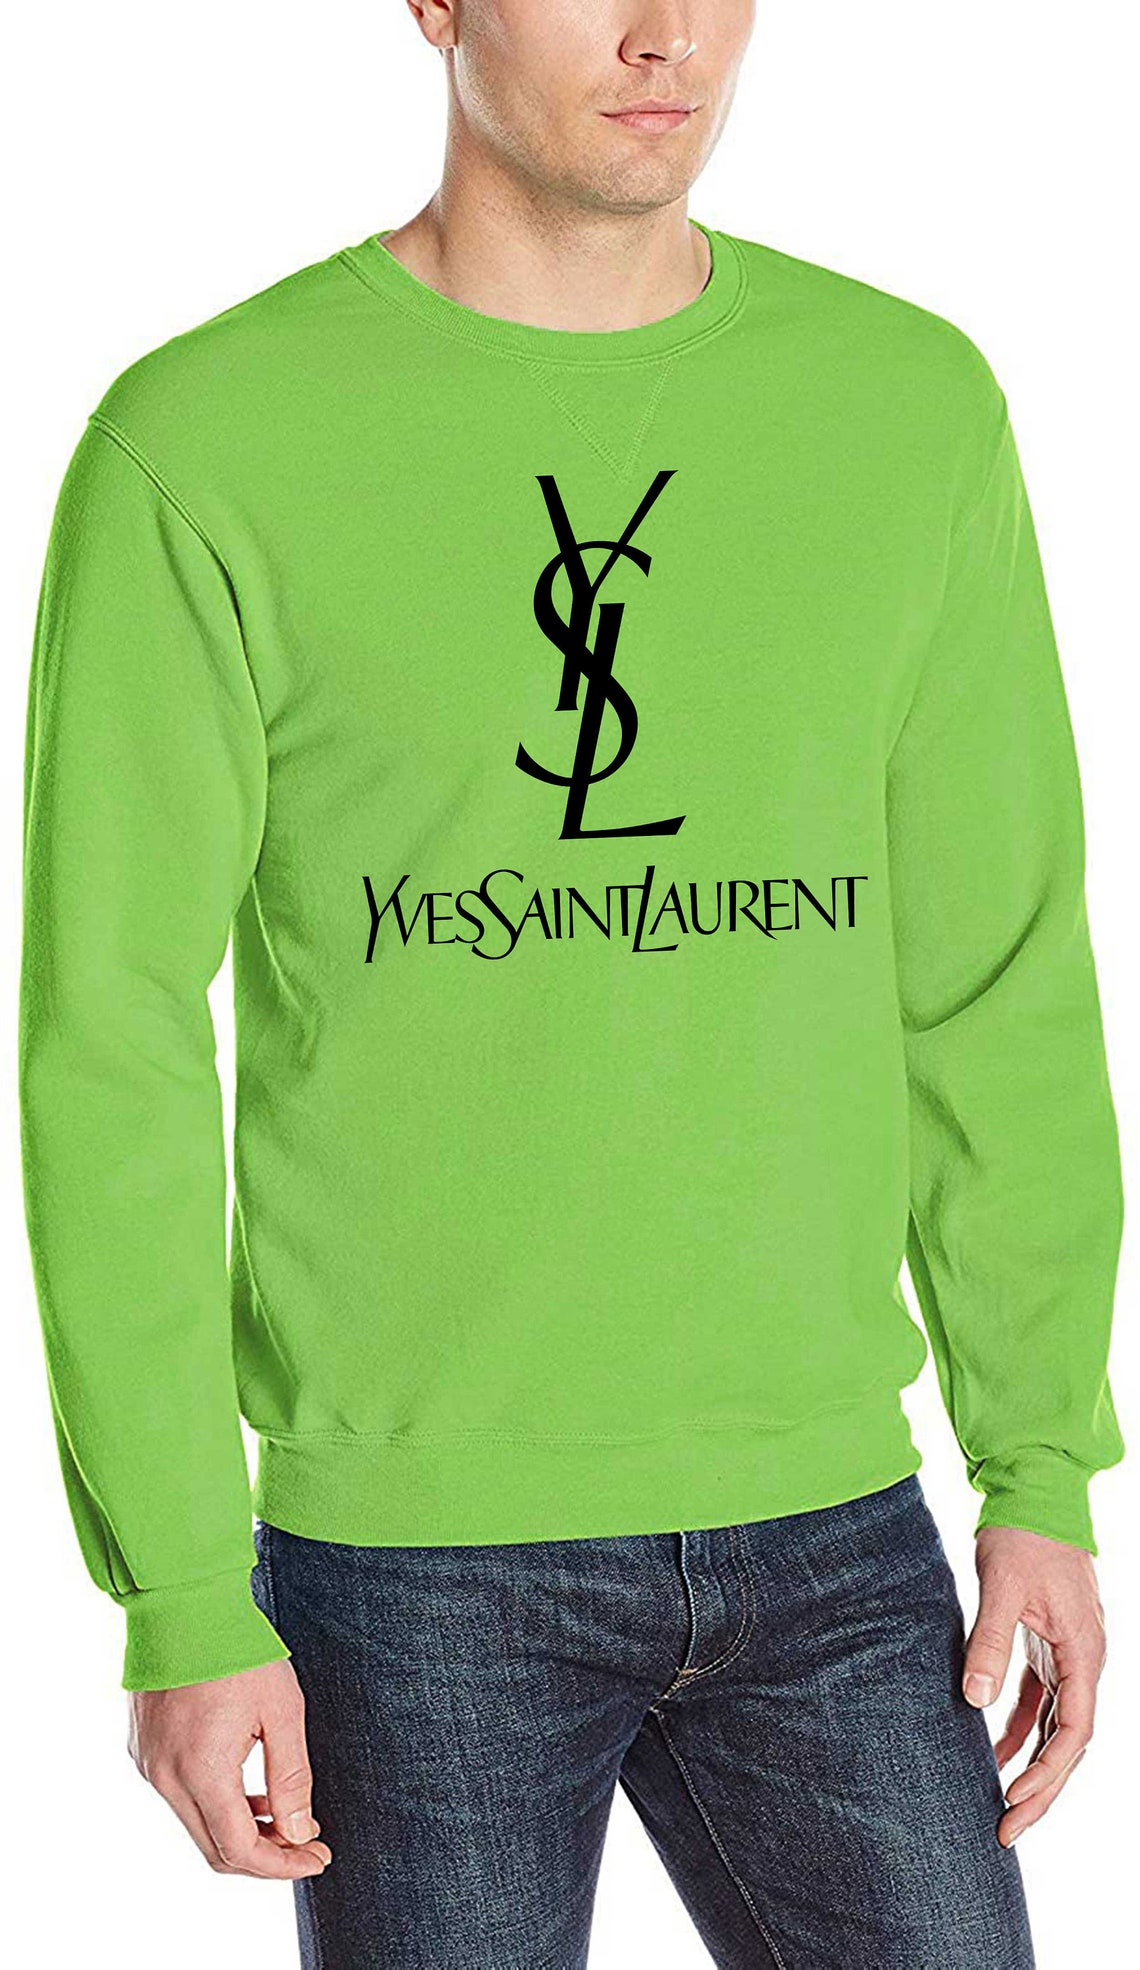 Original Ysl Logo Yves Saint Laurent T-Shirt Ysl Luxury | Etsy